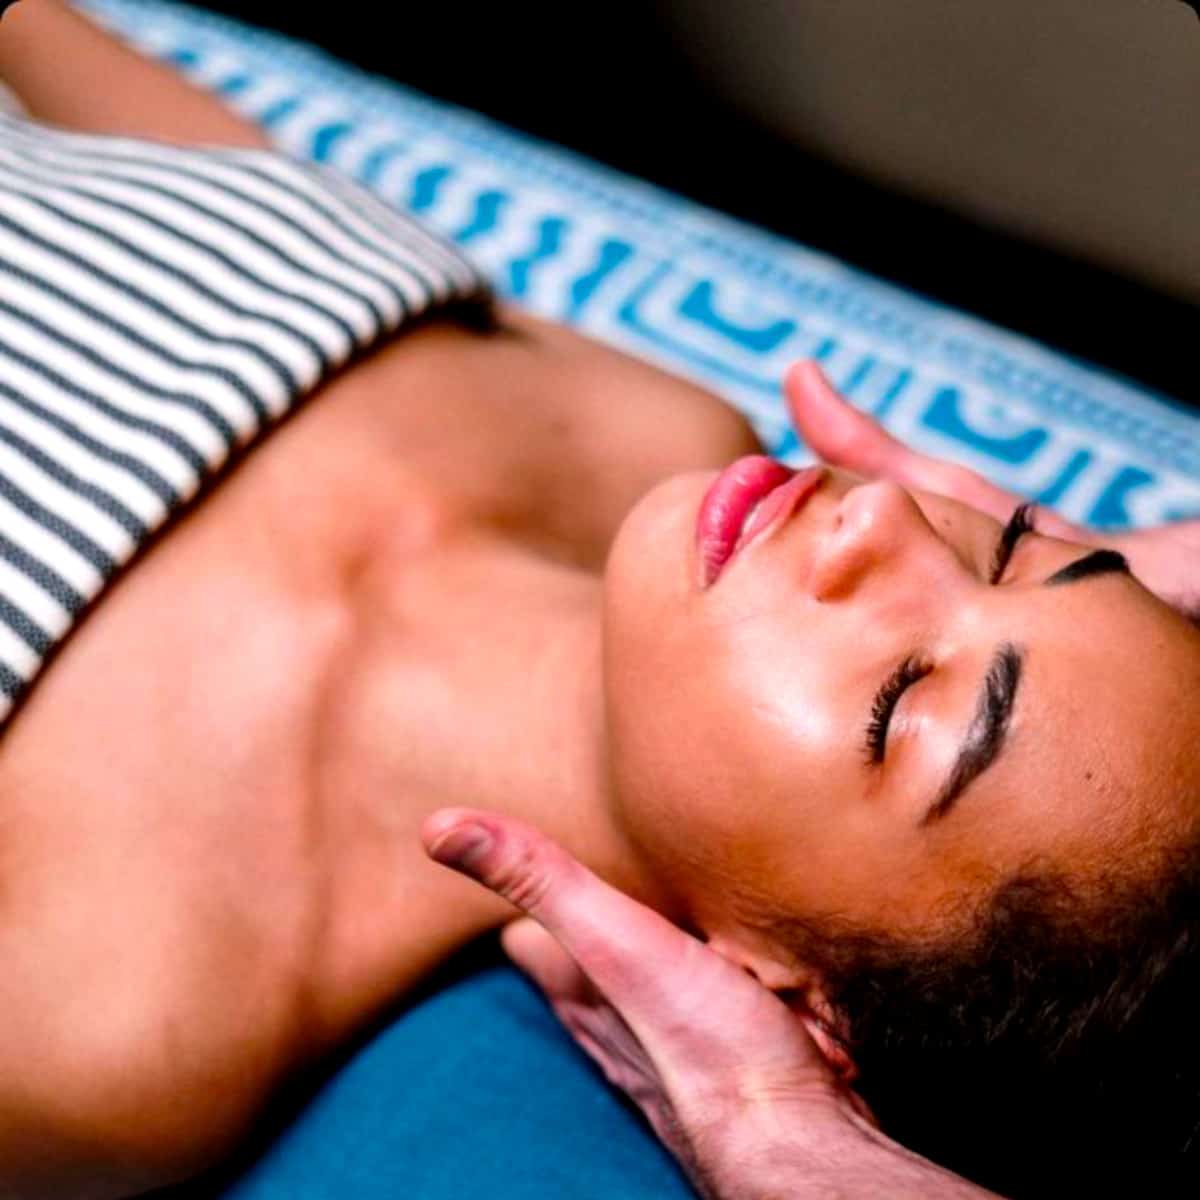 a woman receiving a massage lying down